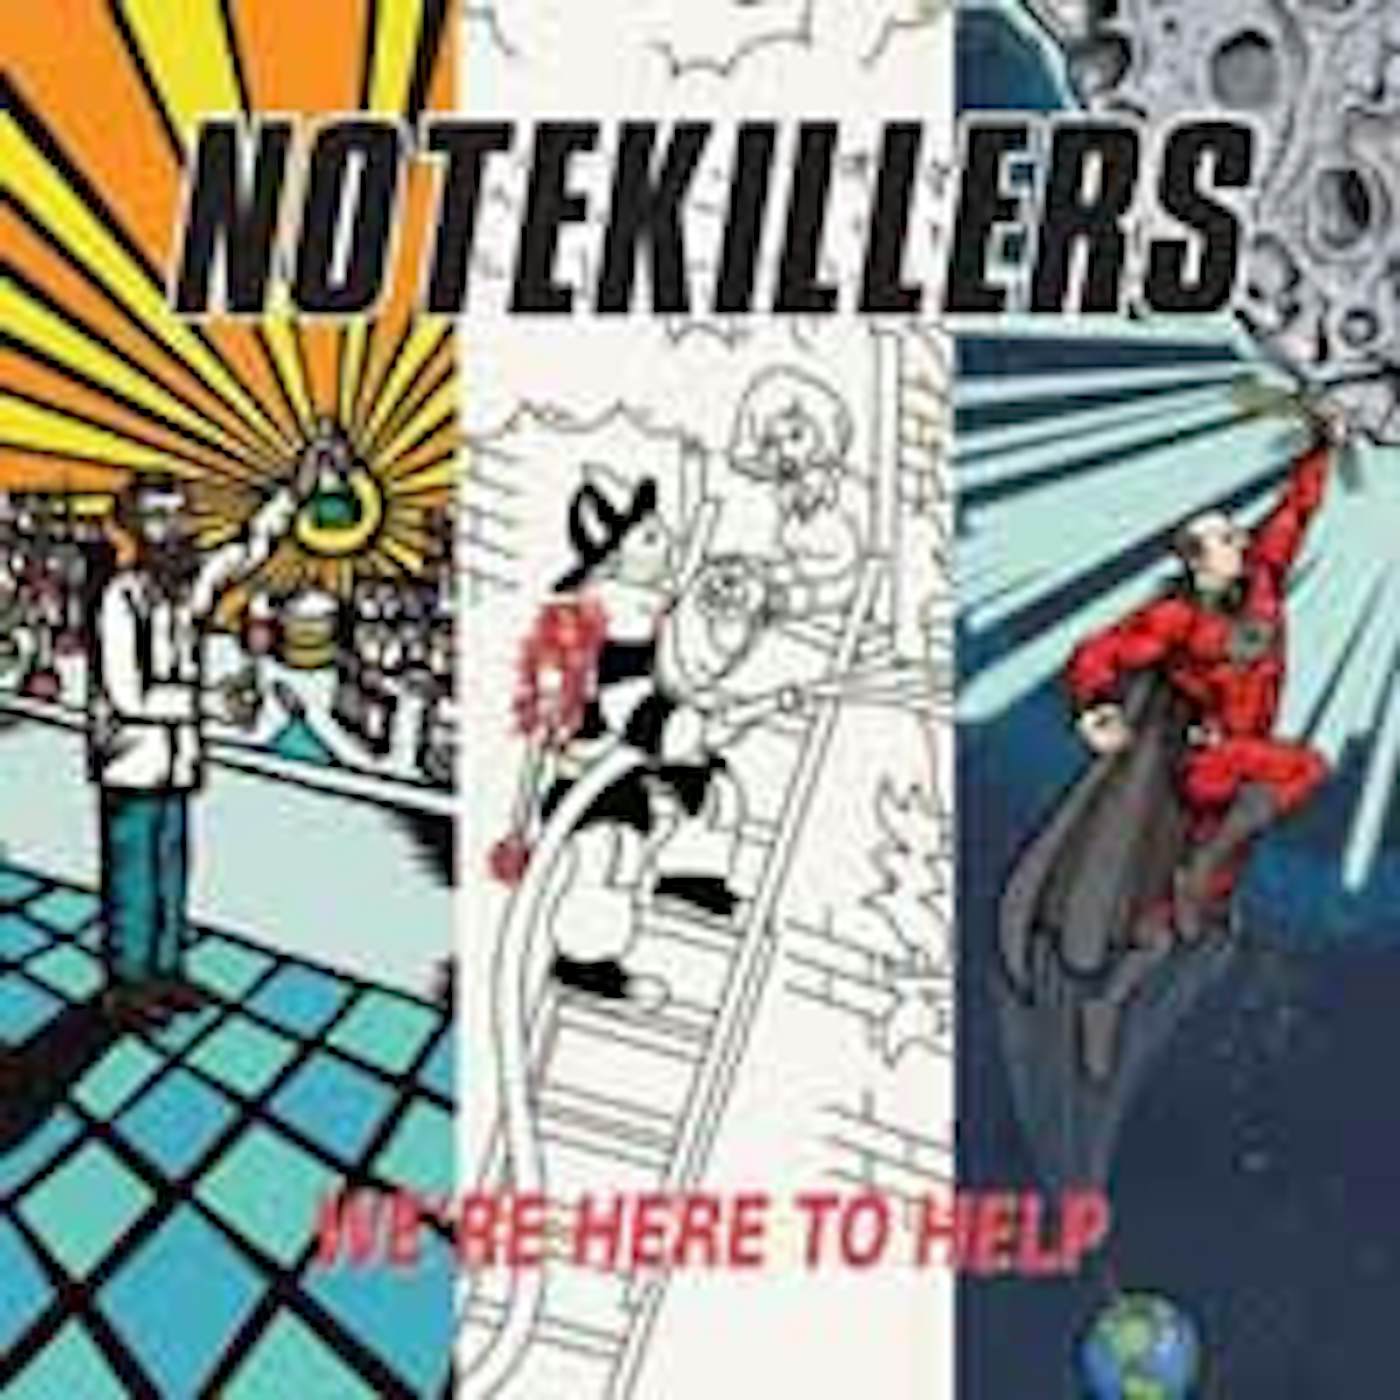 Notekillers LP - We'Re Here To Help (Vinyl)